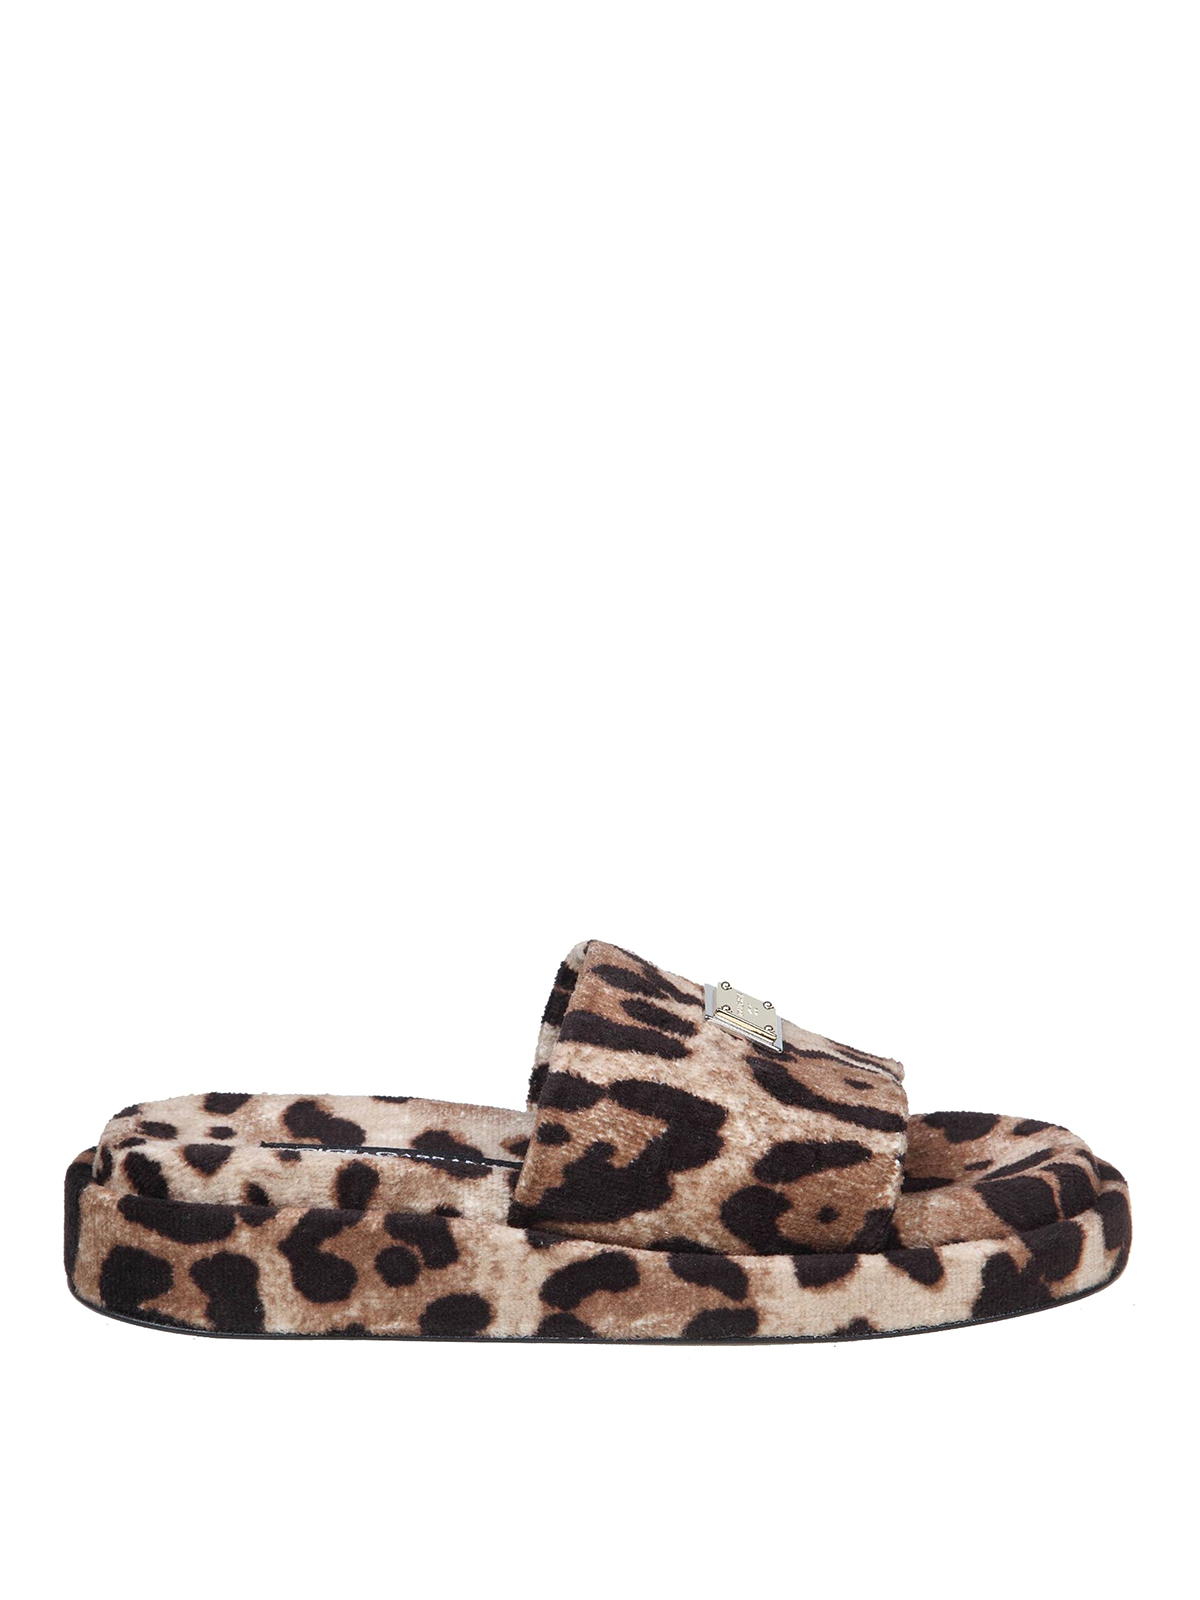 Dolce & Gabbana Leopard Print Sponge Sandals In Animal Print